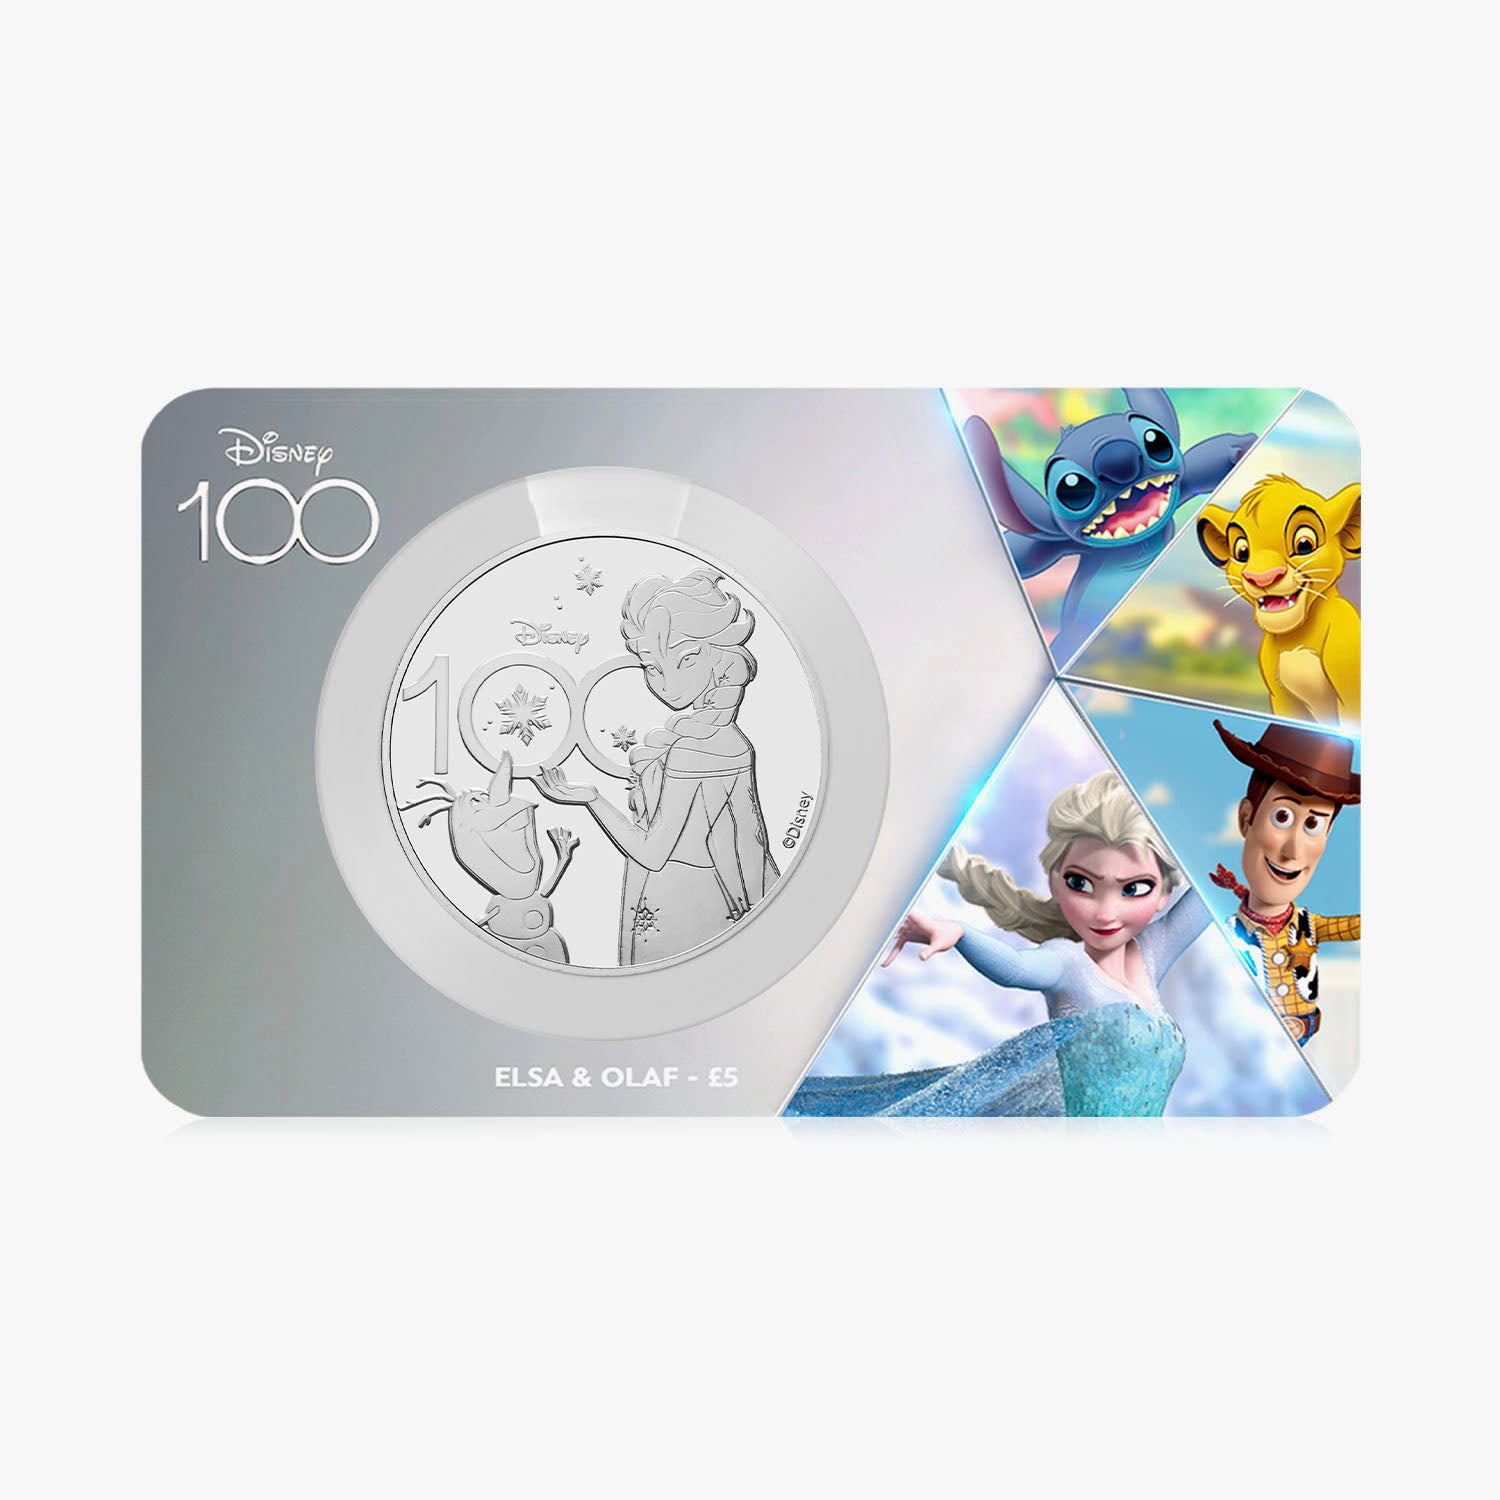 Disney 100th Anniversary Frozen 2023 Â£5 BU Coin